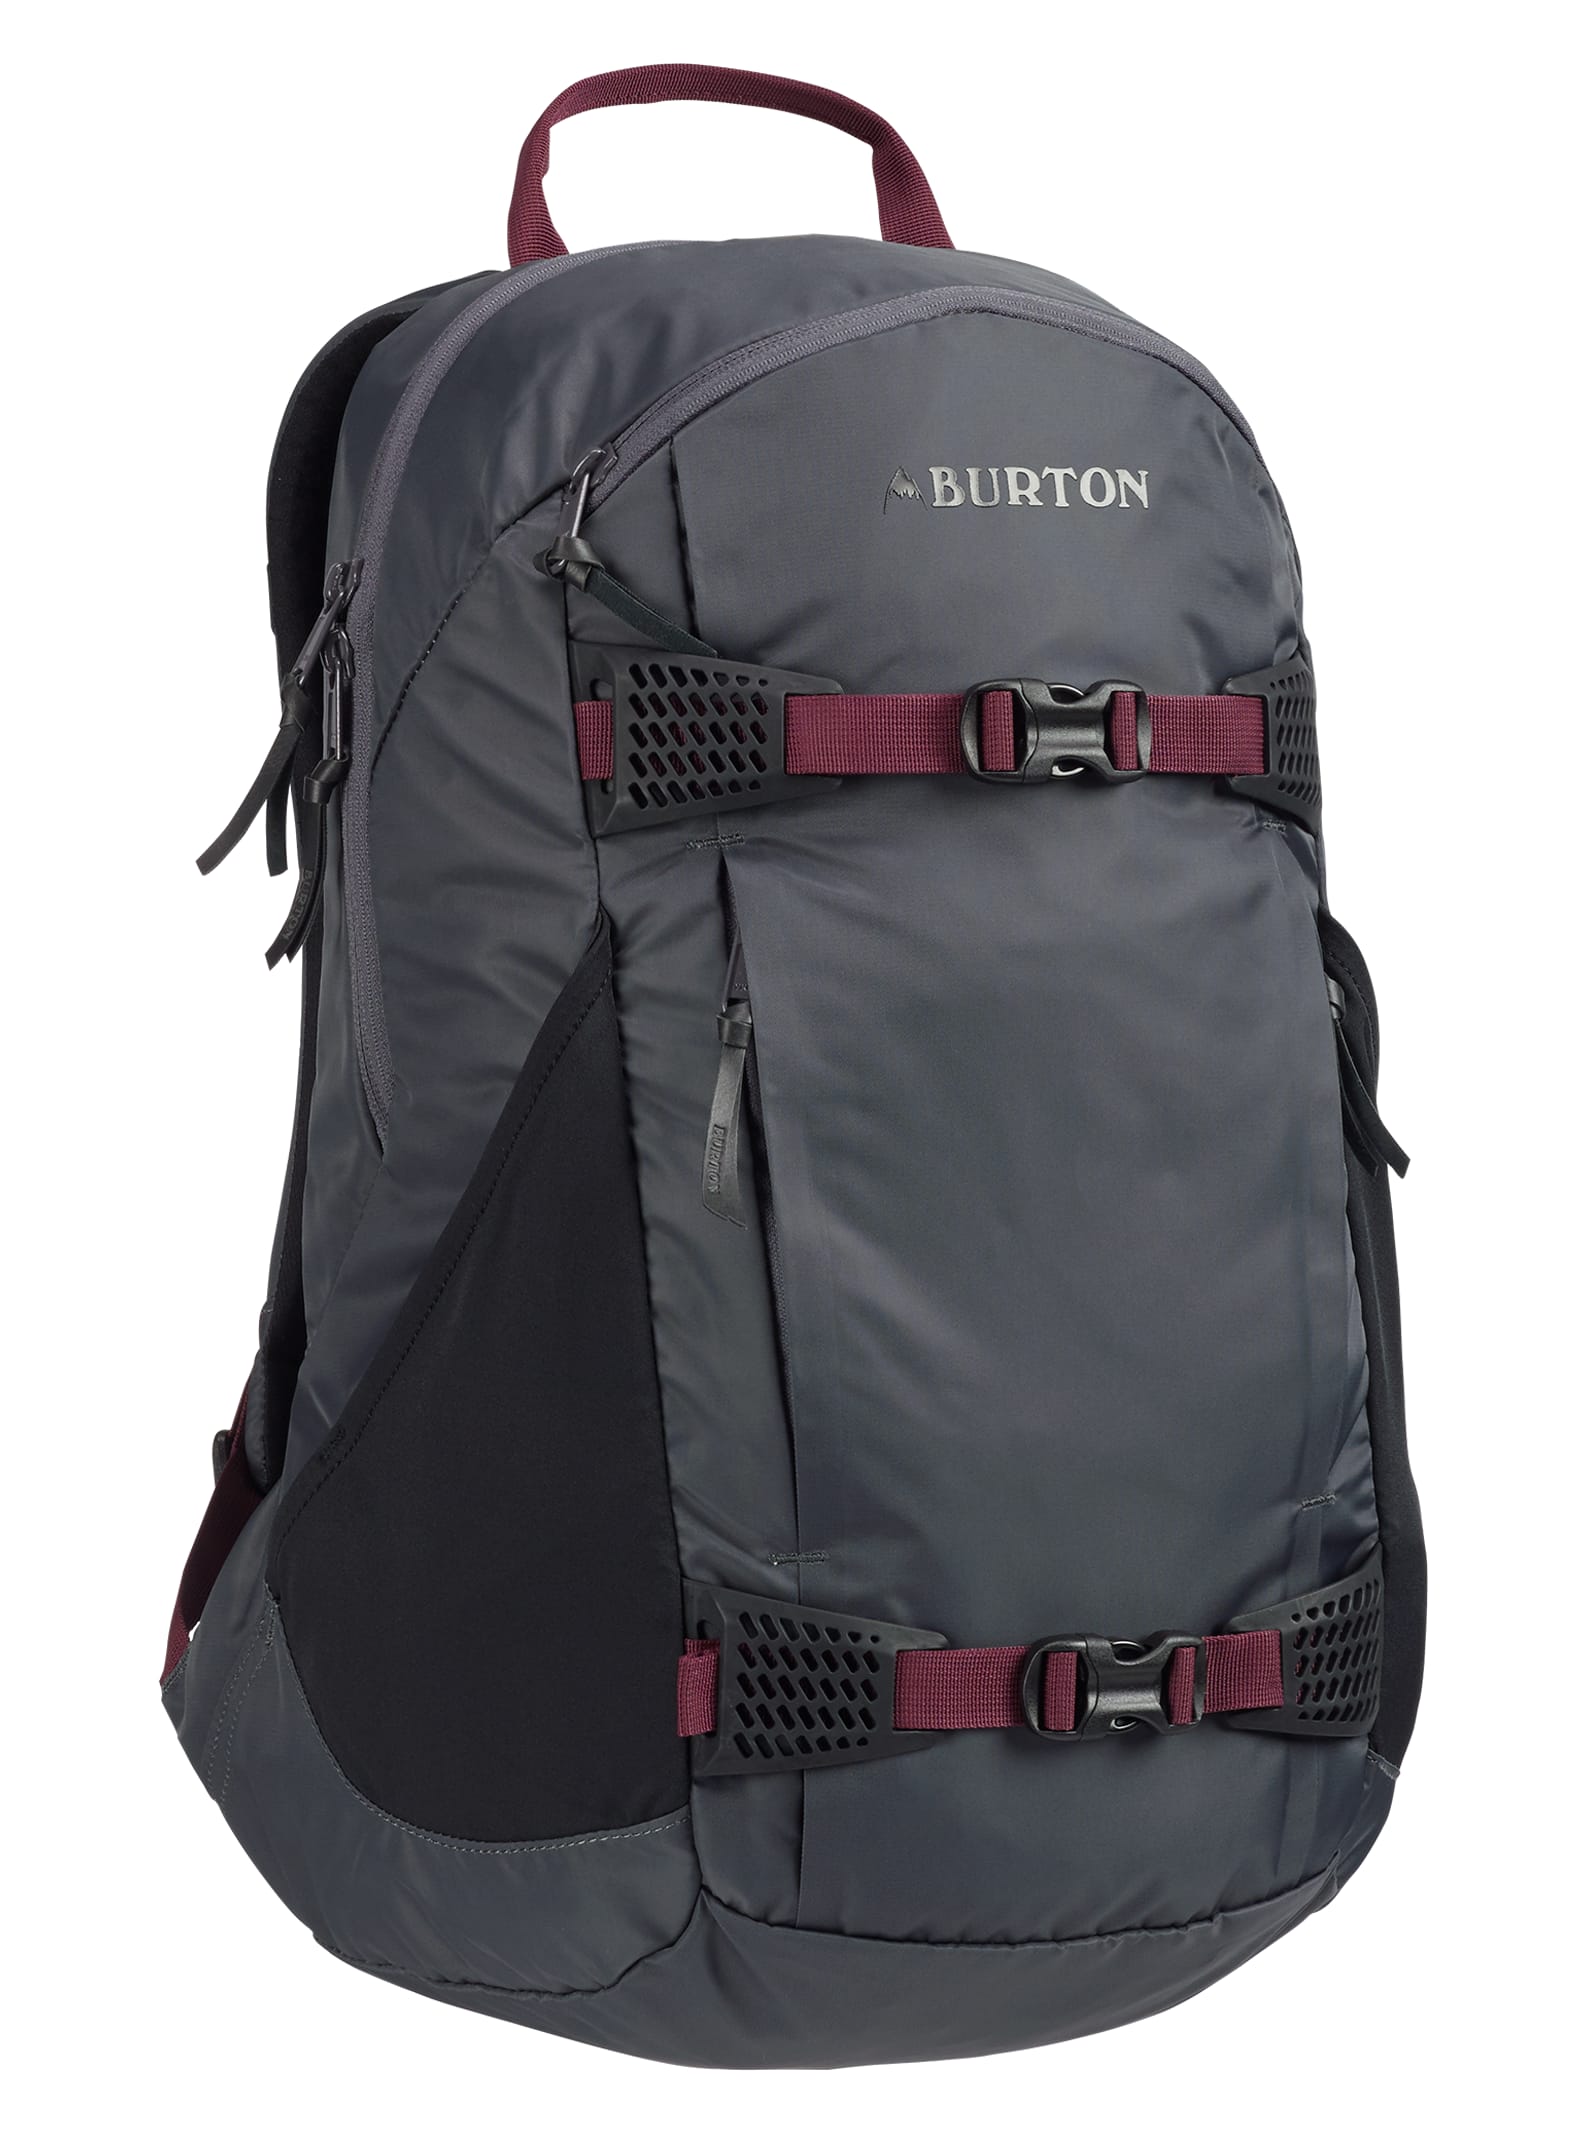 Burton Women's Day Hiker 25L Backpack | Burton.com Fall 2019 US